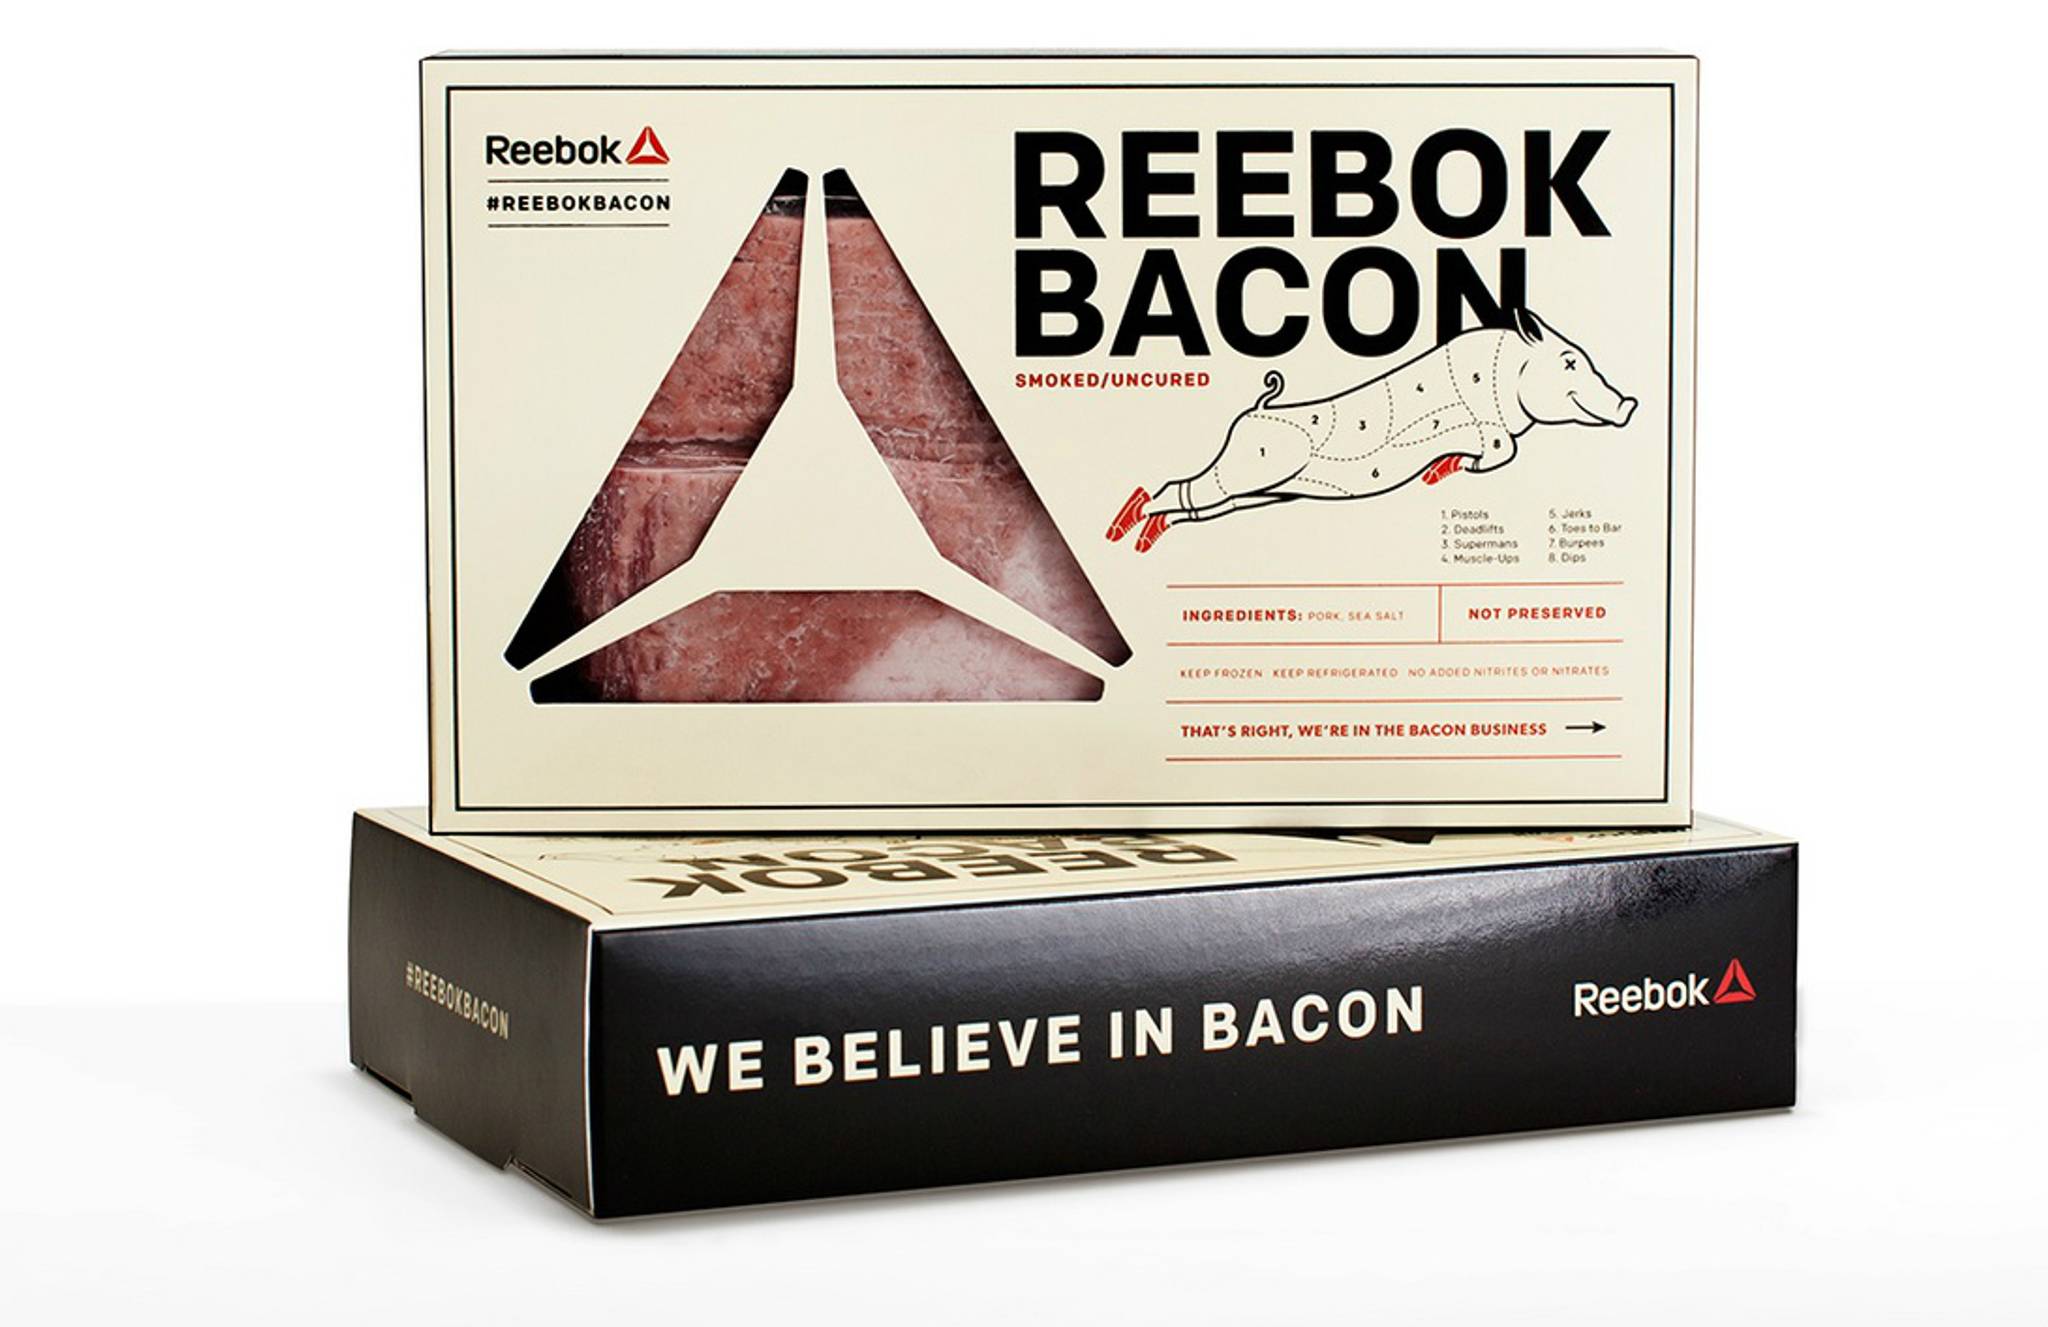 Reebok launches Reebok Bacon